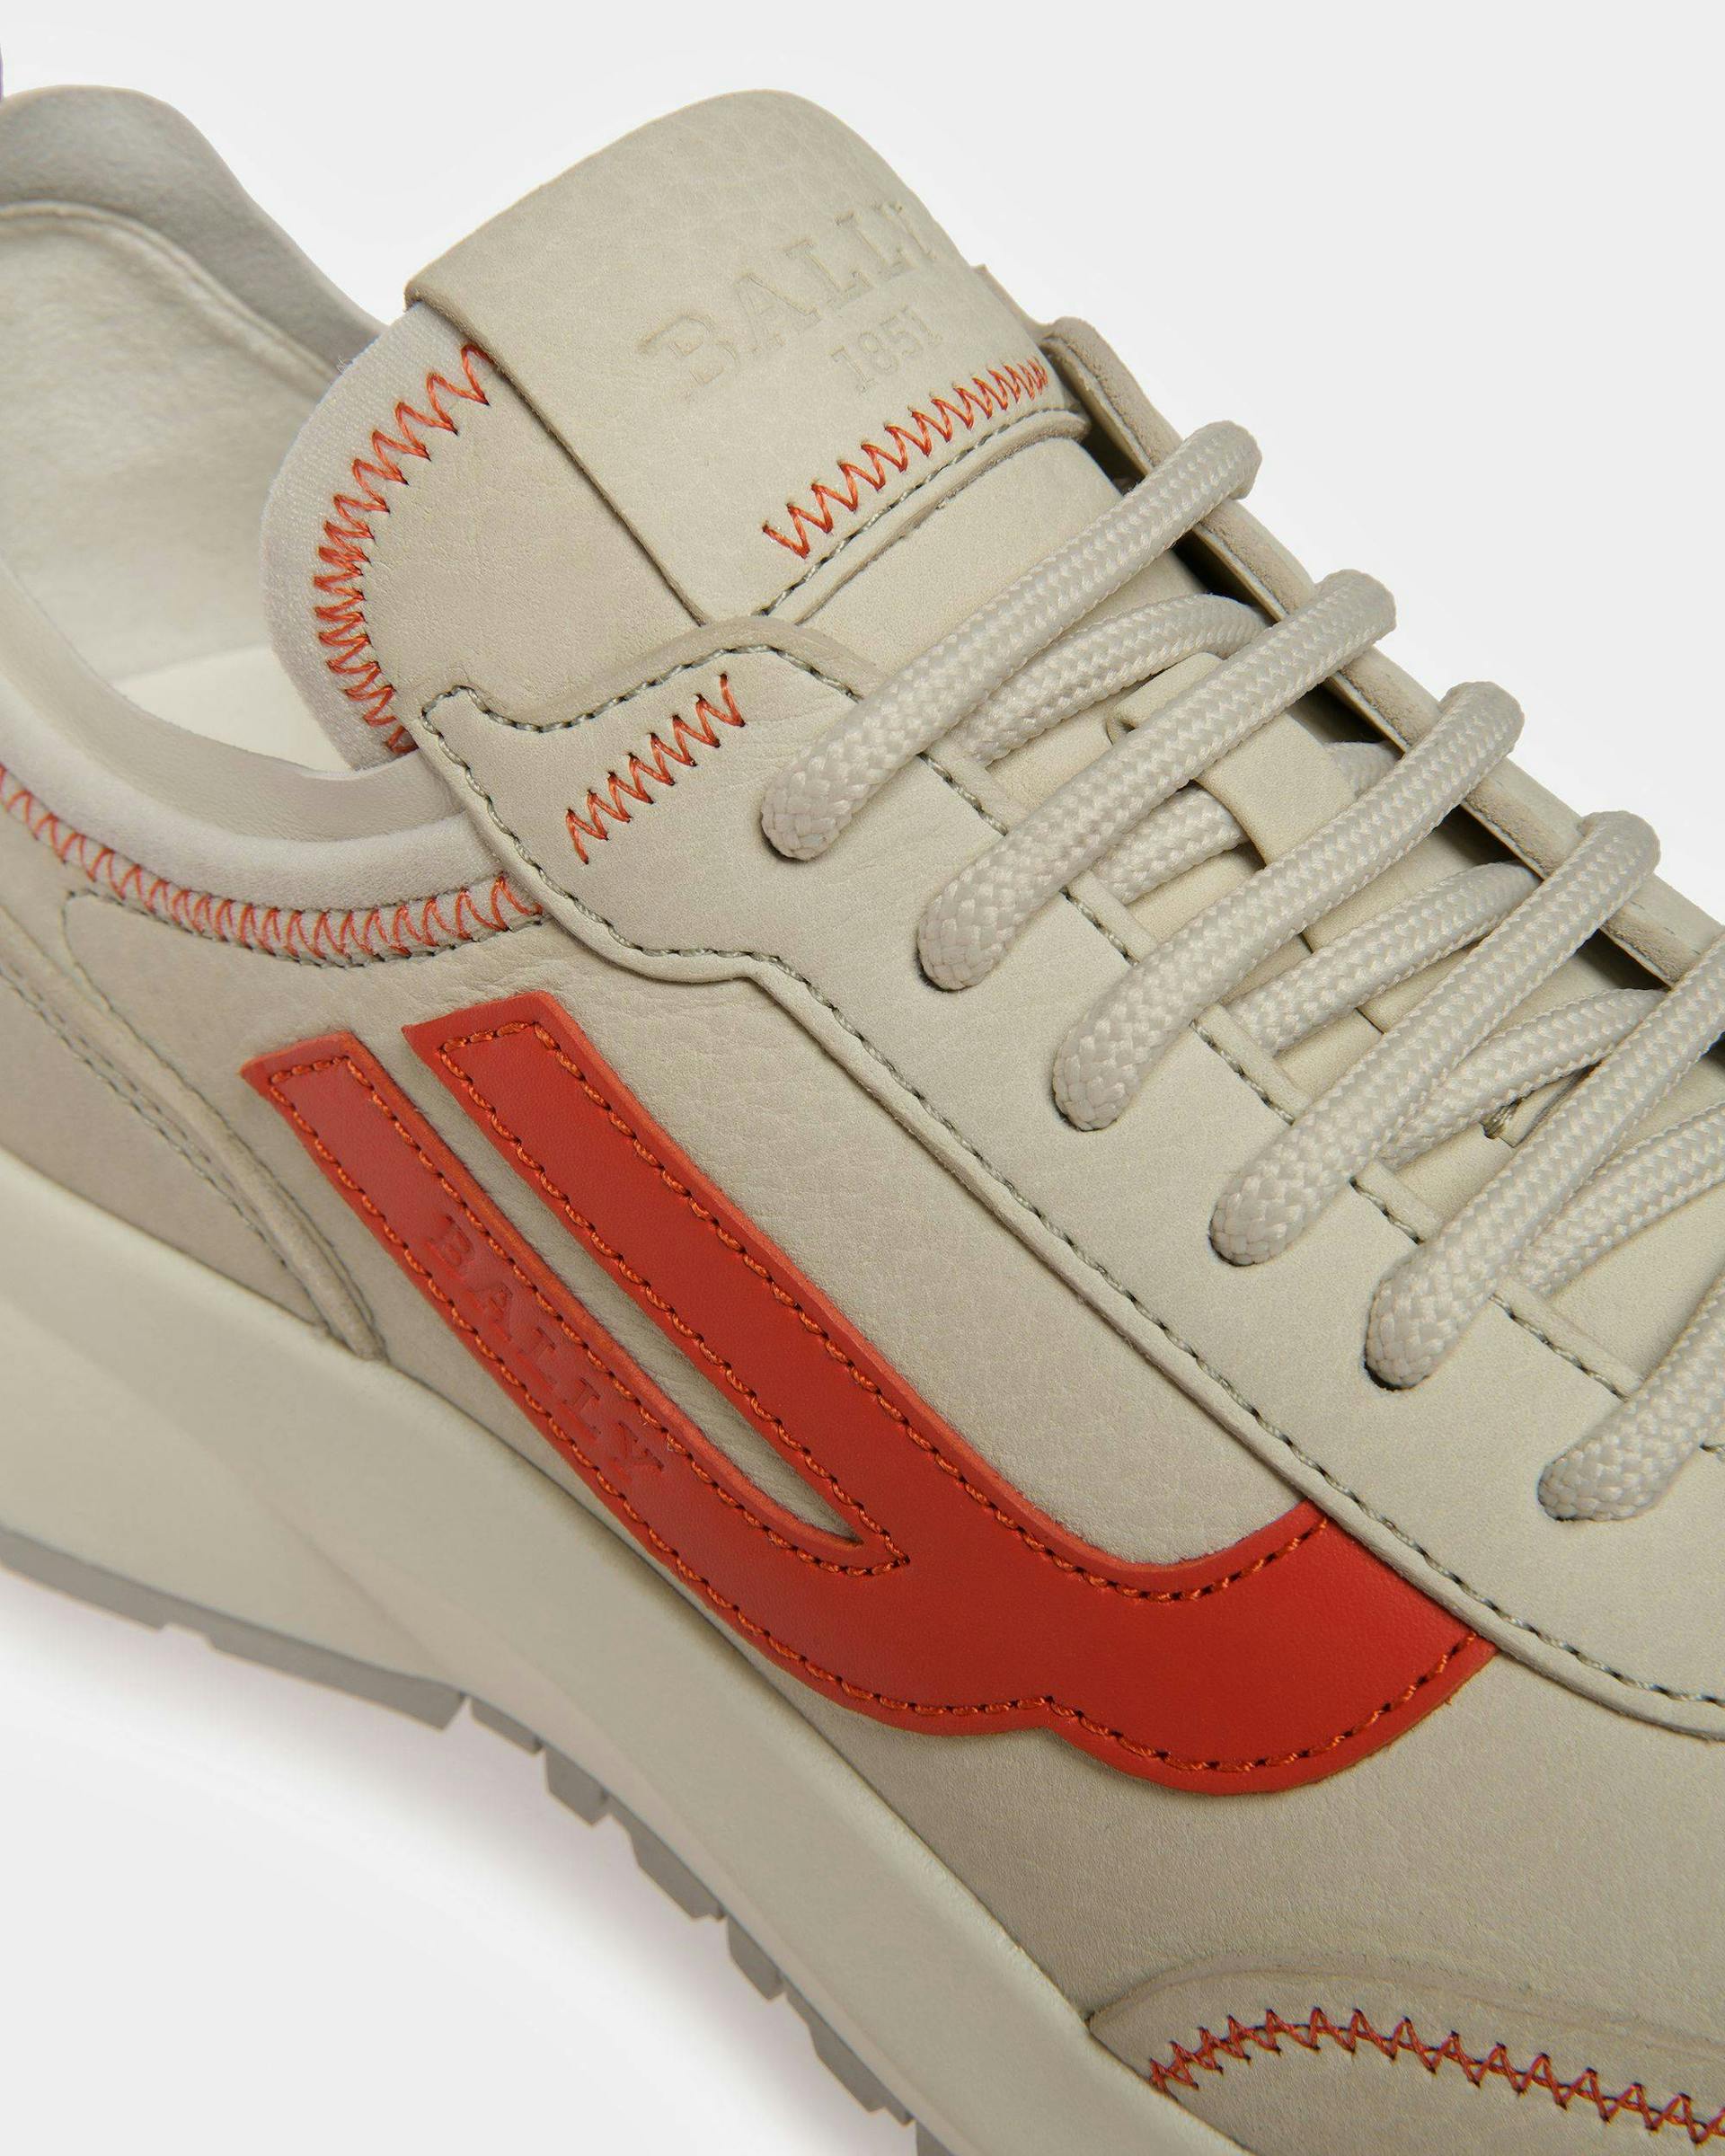 Darys Leather Sneakers In Dusty White And Orange - Women's - Bally - 06